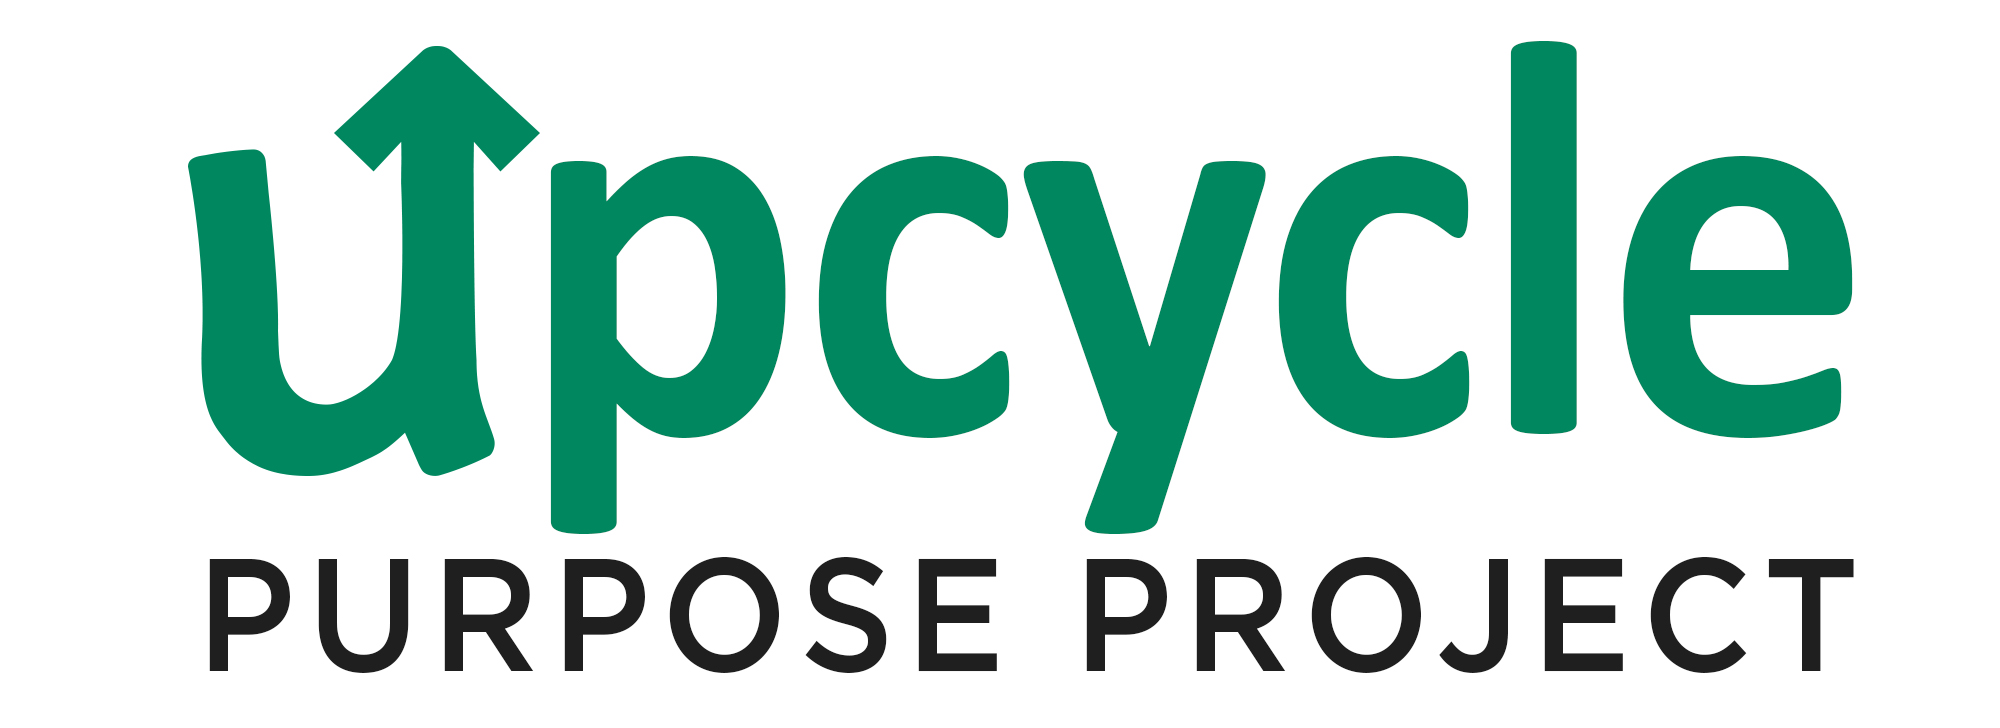 upcycle-logo.jpg